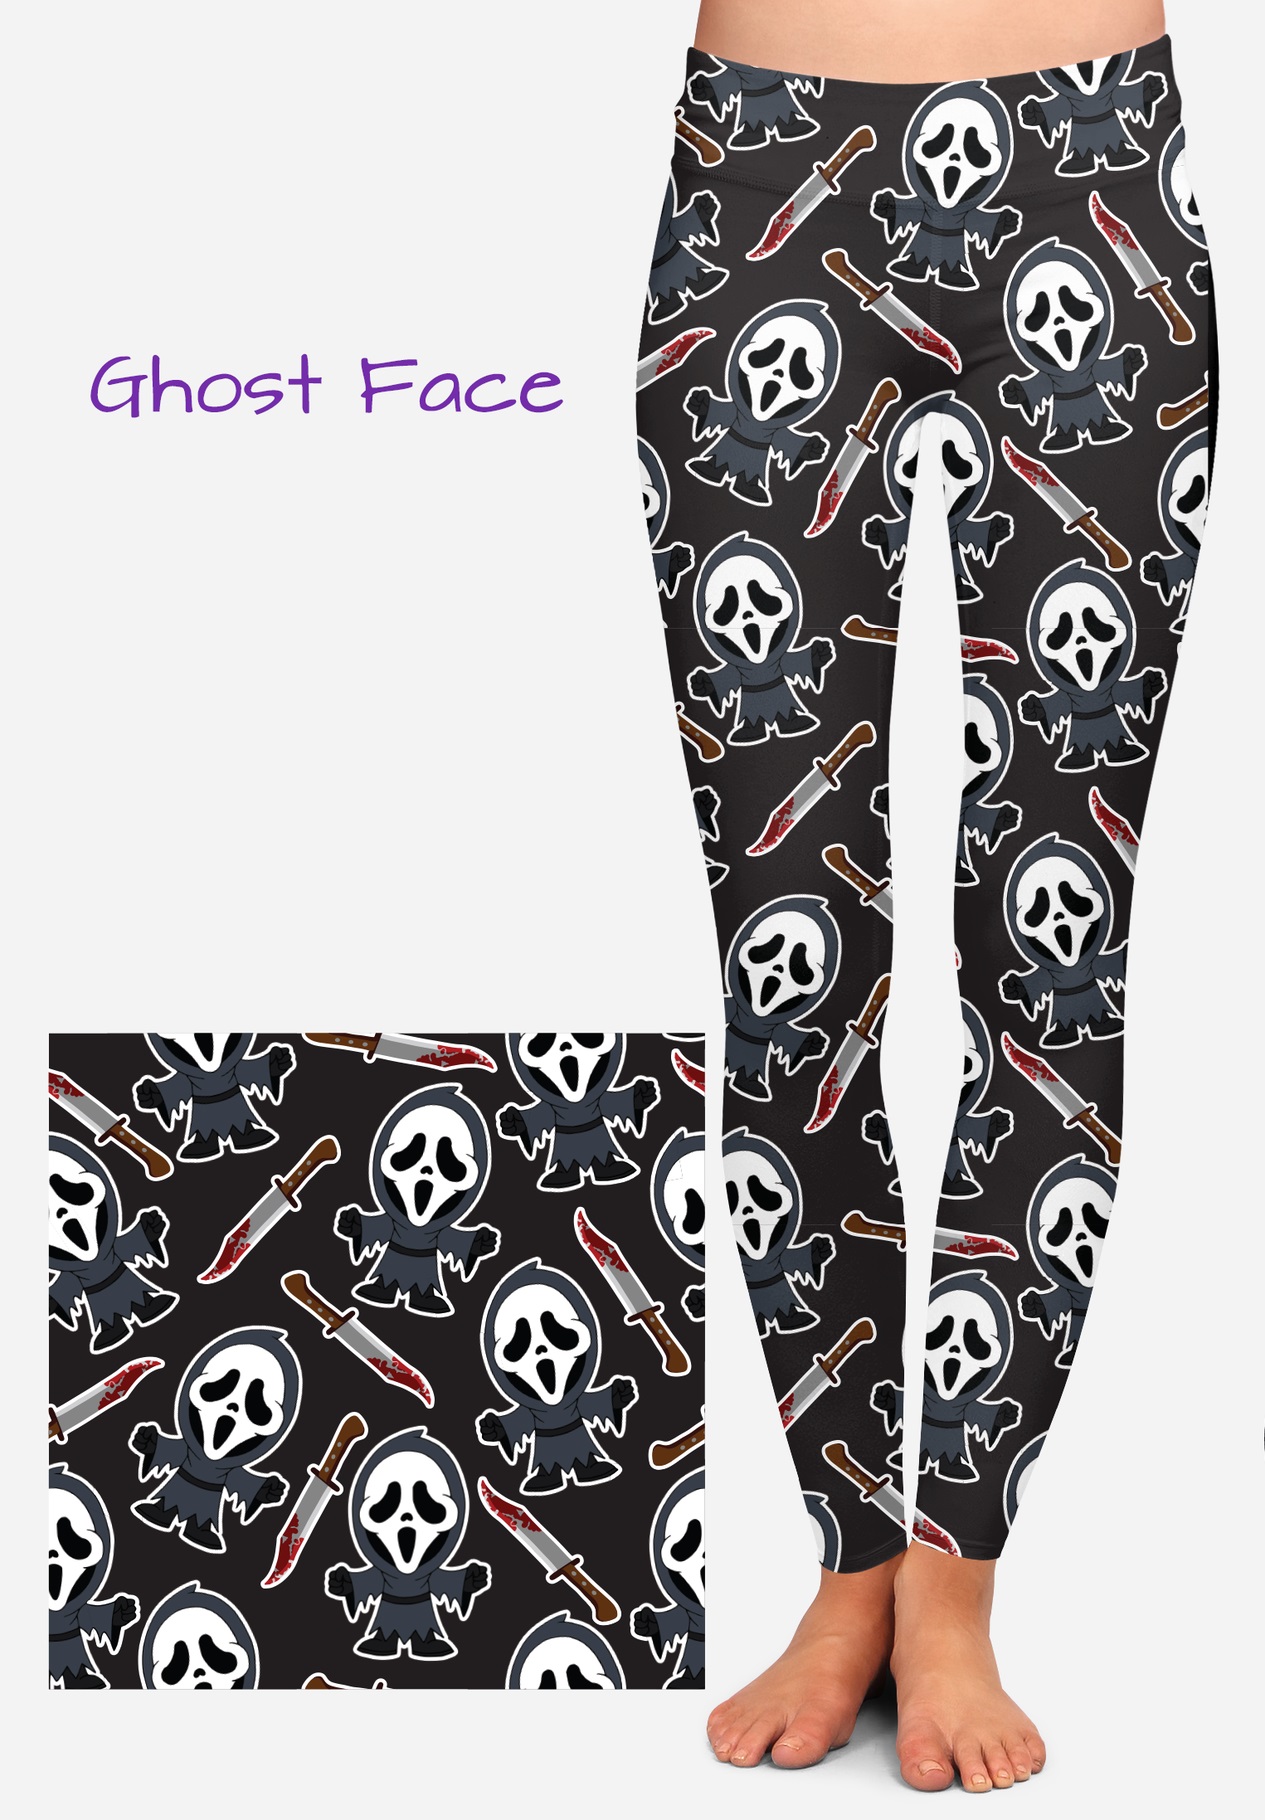 https://www.screamerscostumes.com/app/uploads/2022/01/Ghost-Face-Scream-Leggings-1.jpg